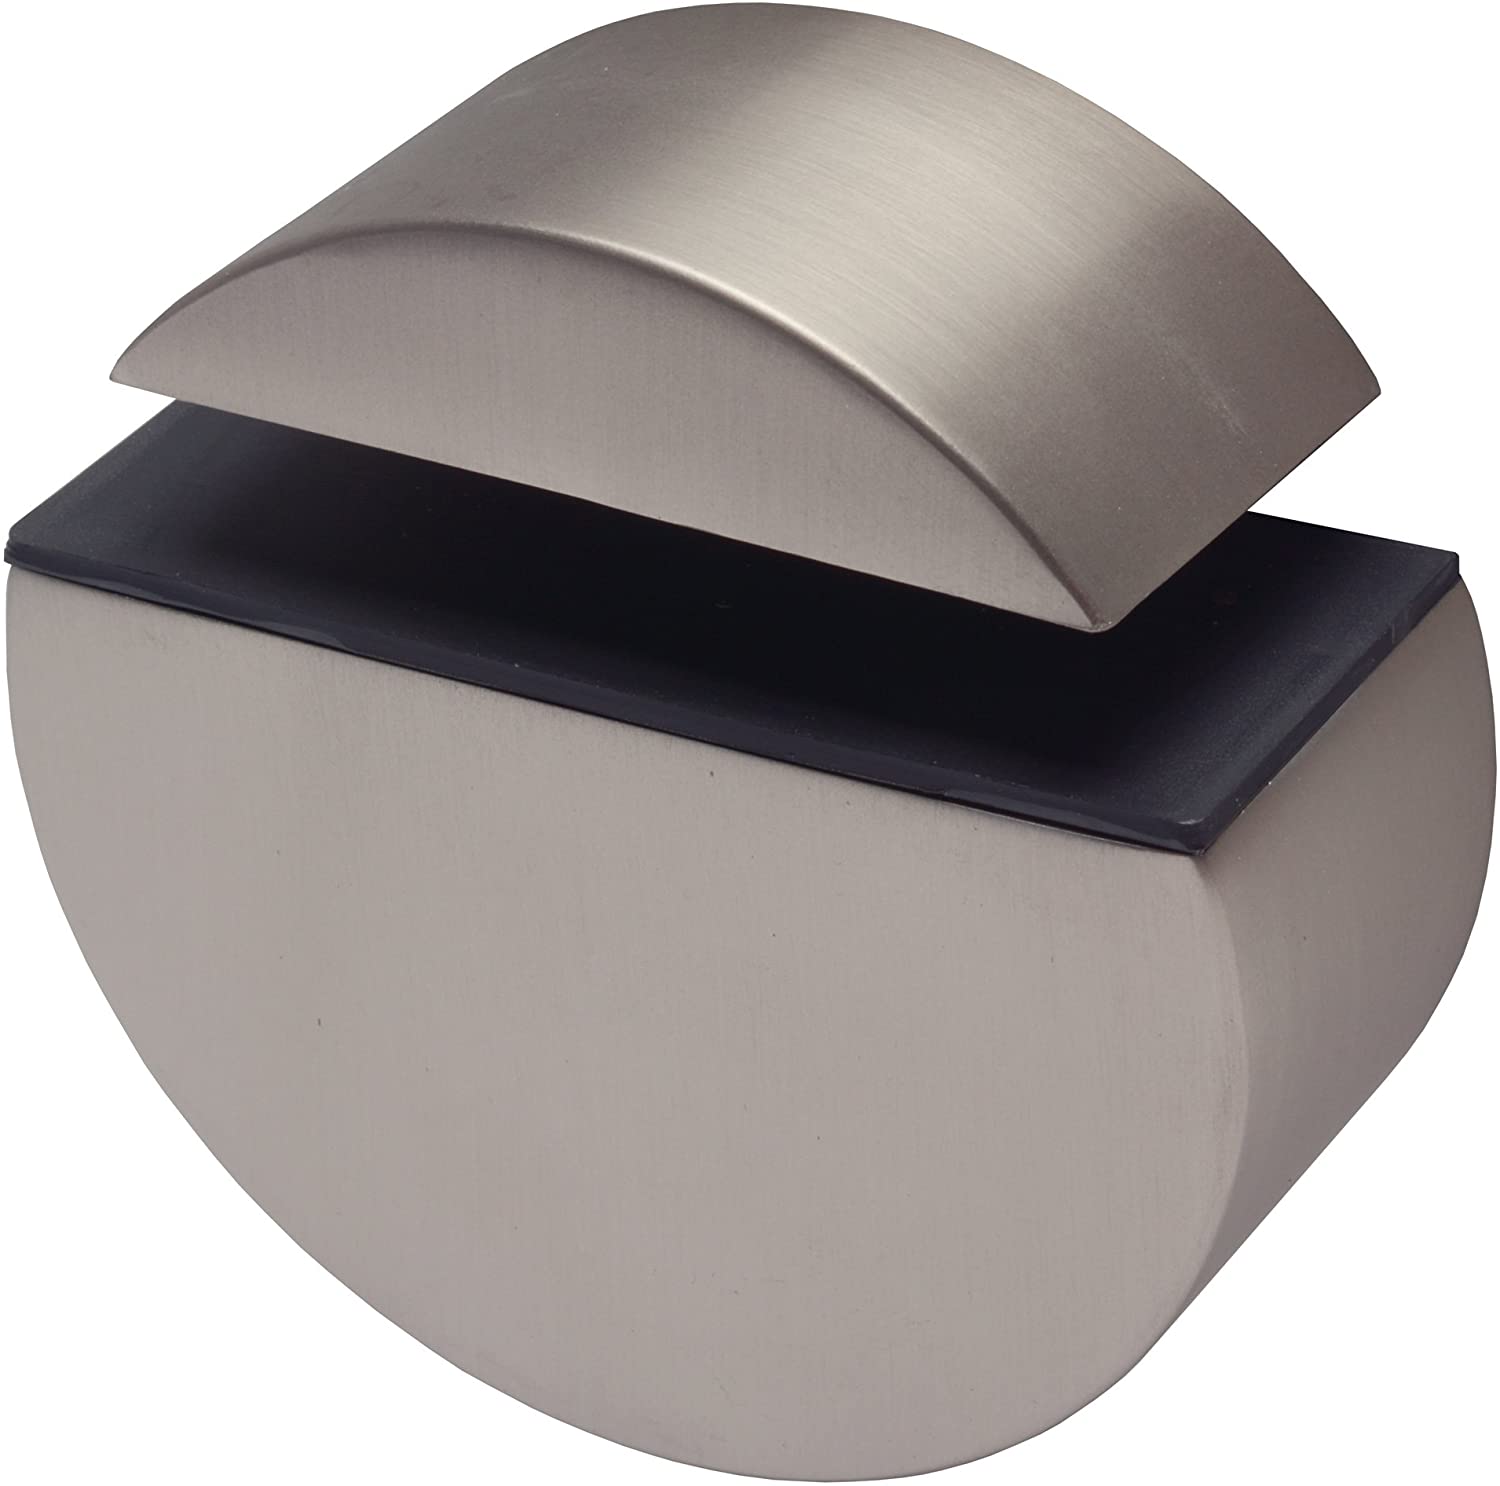 Duraline Clip Circle Brushed Nickel Shelf Bracket RRP 5.99 CLEARANCE XL 3.99